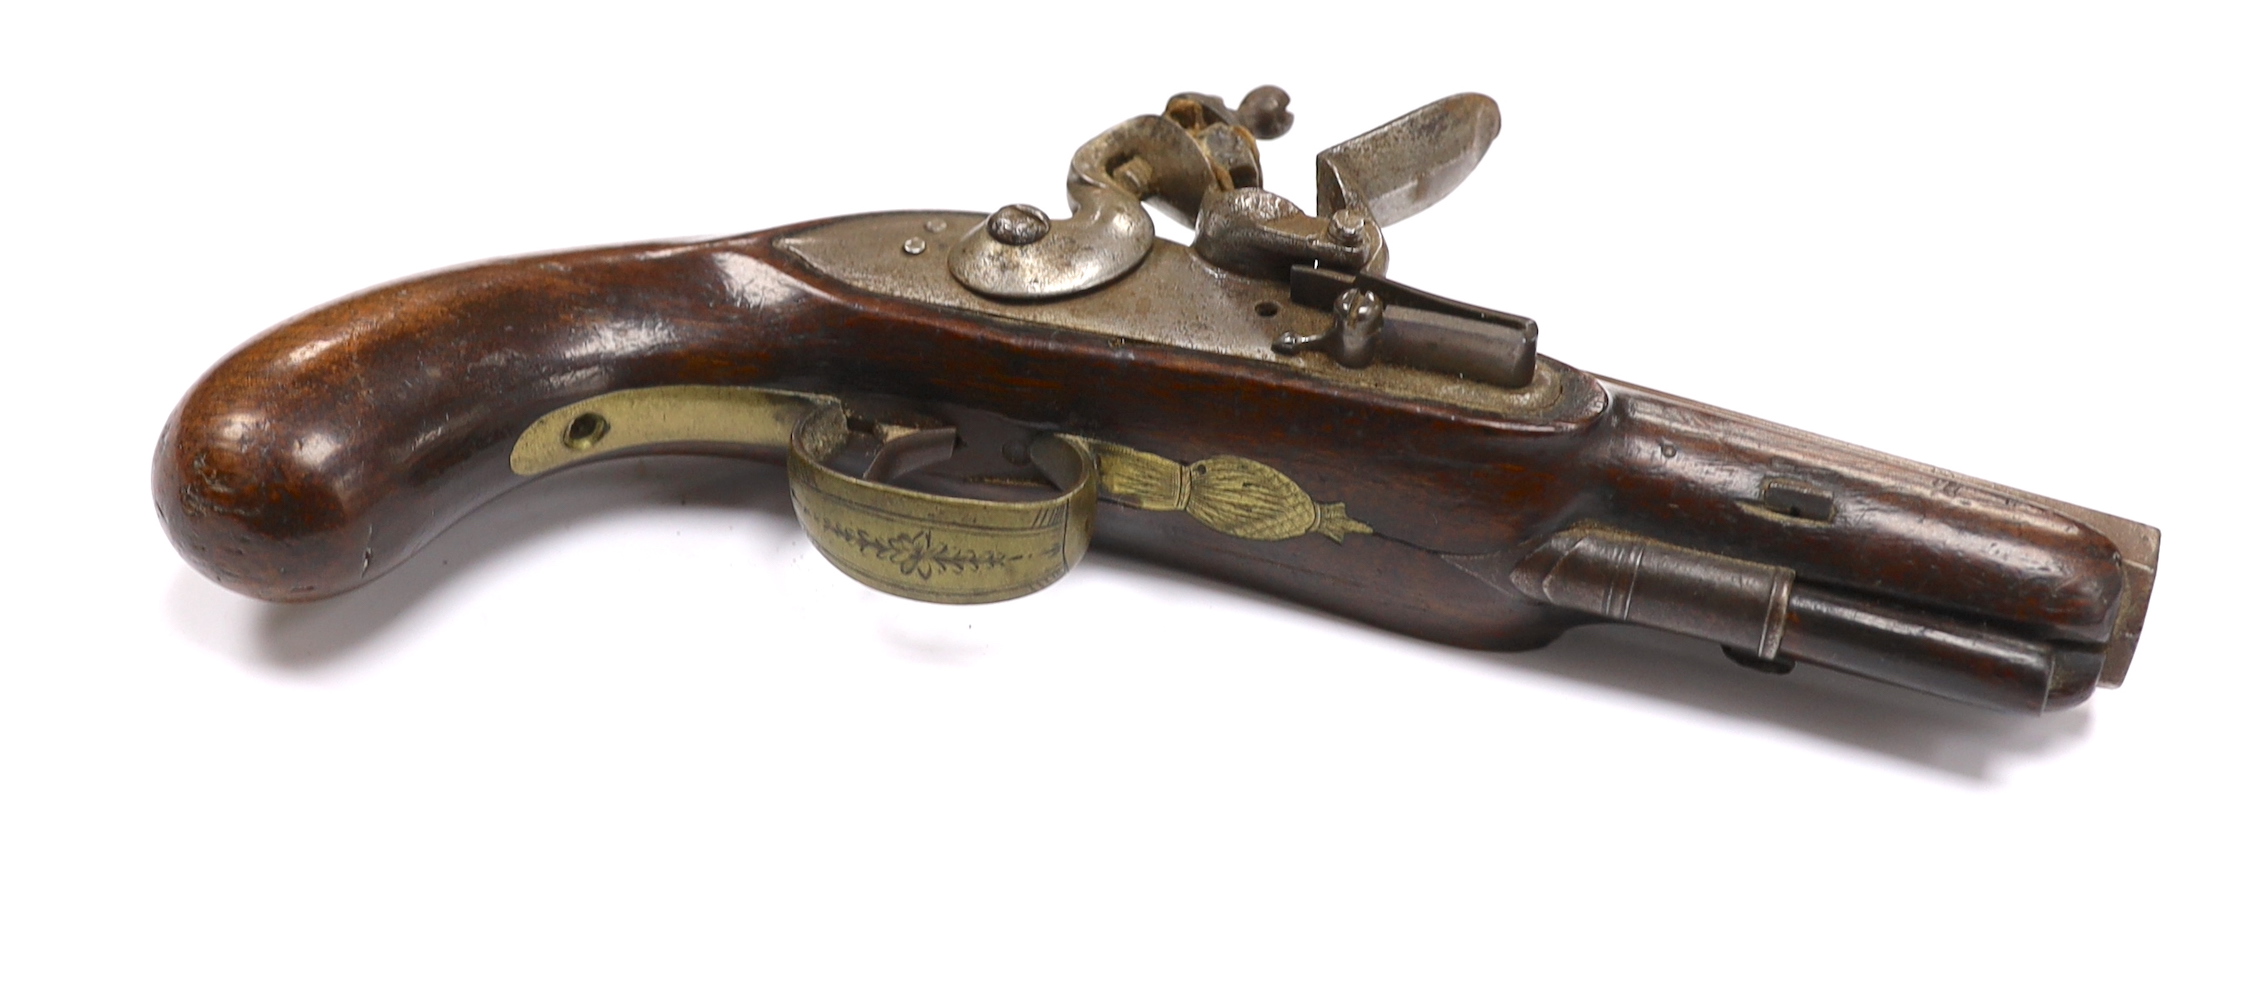 A flintlock overcoat pistol c.1820, octagonal barrel with gold inlaid breach line and engraved trigger guard, barrel 11.3cm